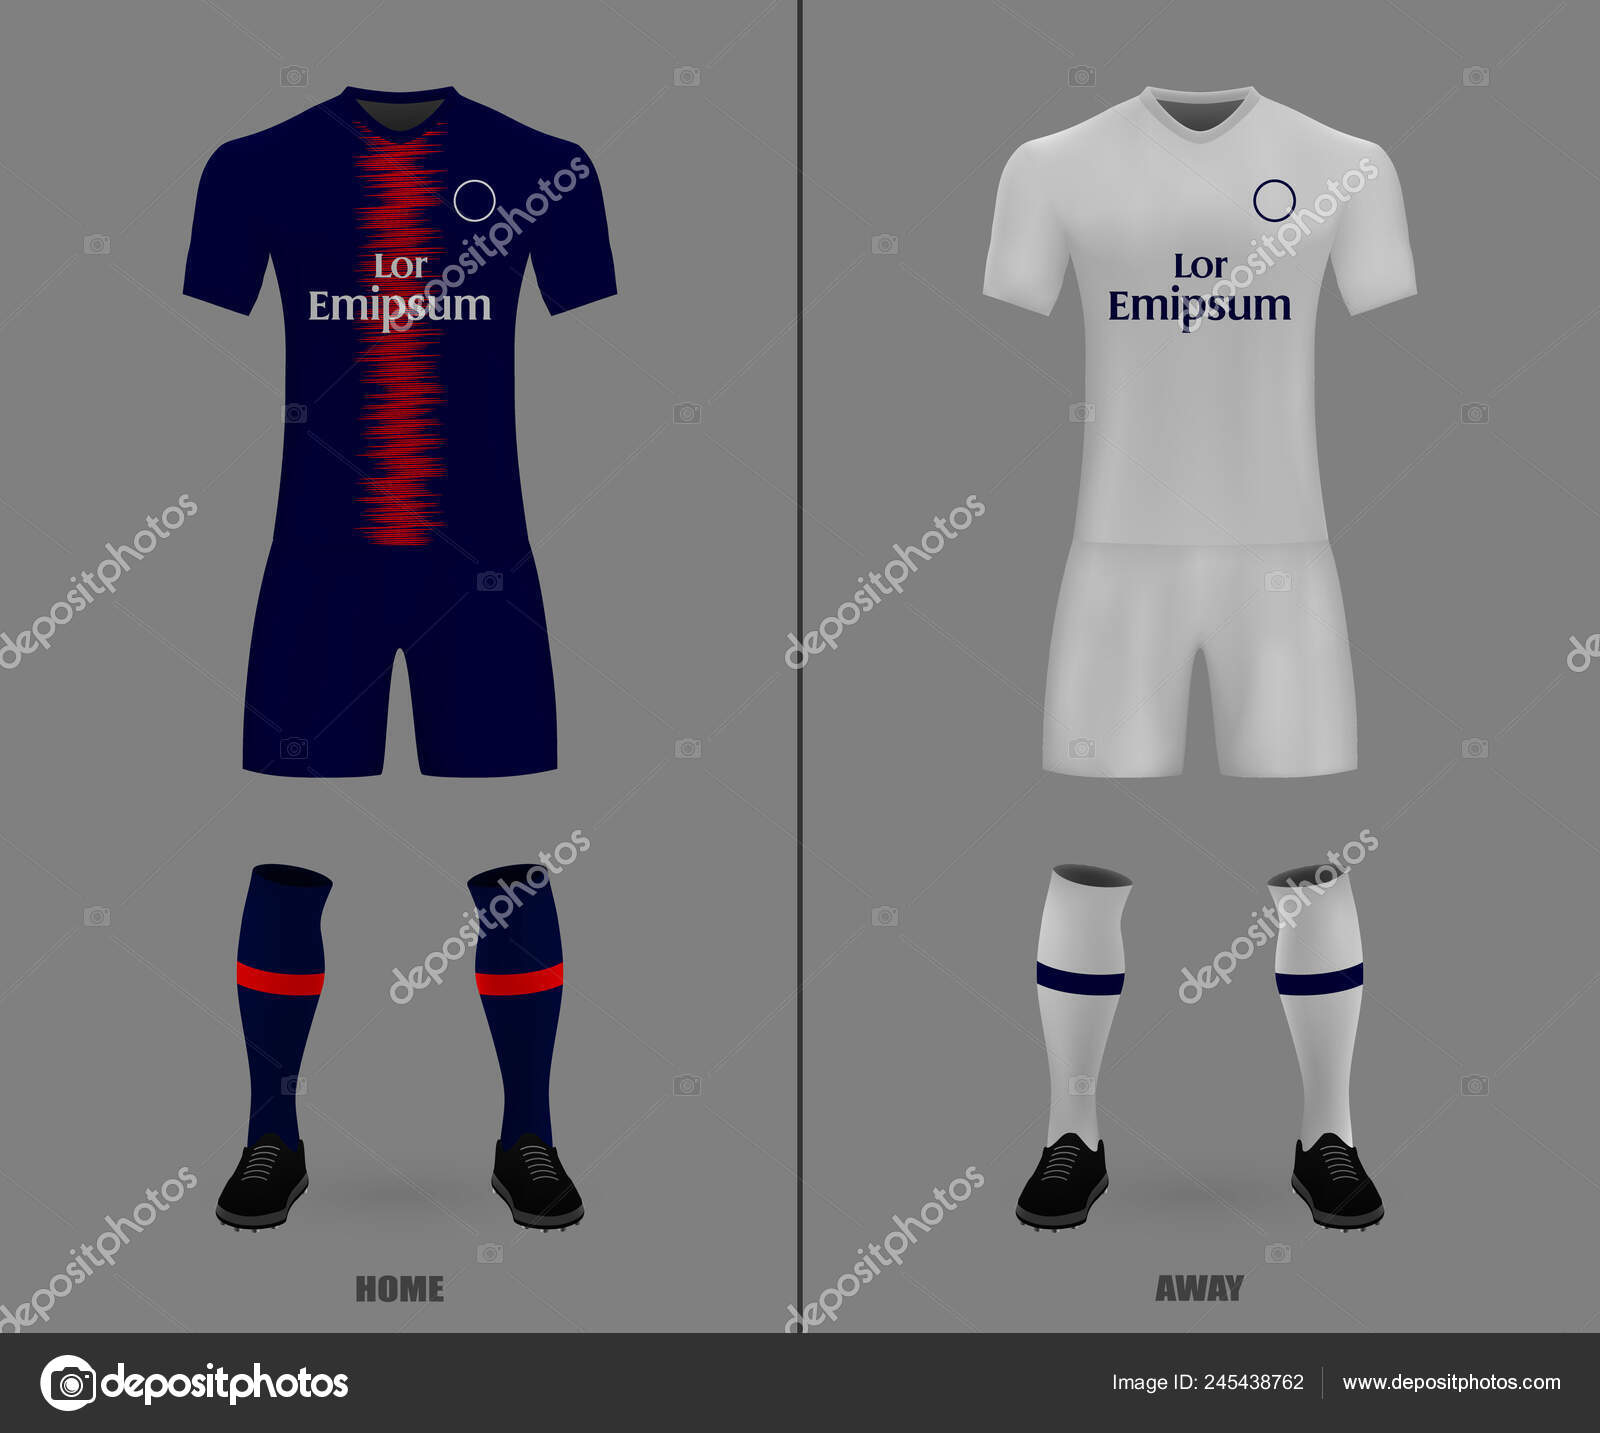 Psg 17-18 kit alternative  Camisas de futebol, Camisa de futebol